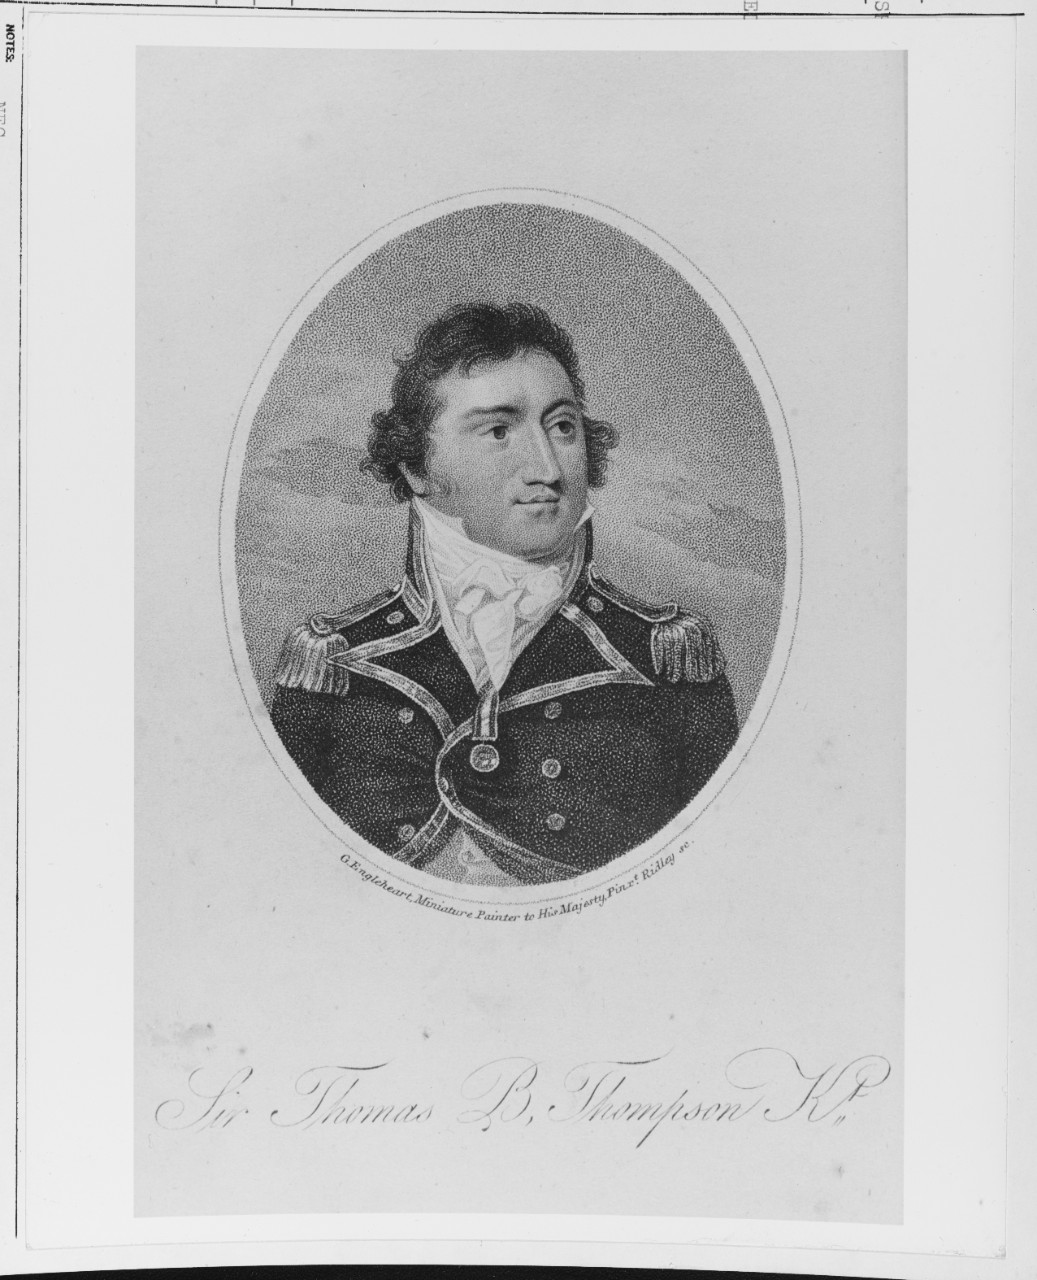 Sir Thomas Boulden Thompson (1766? - 1828), British Vice Admiral